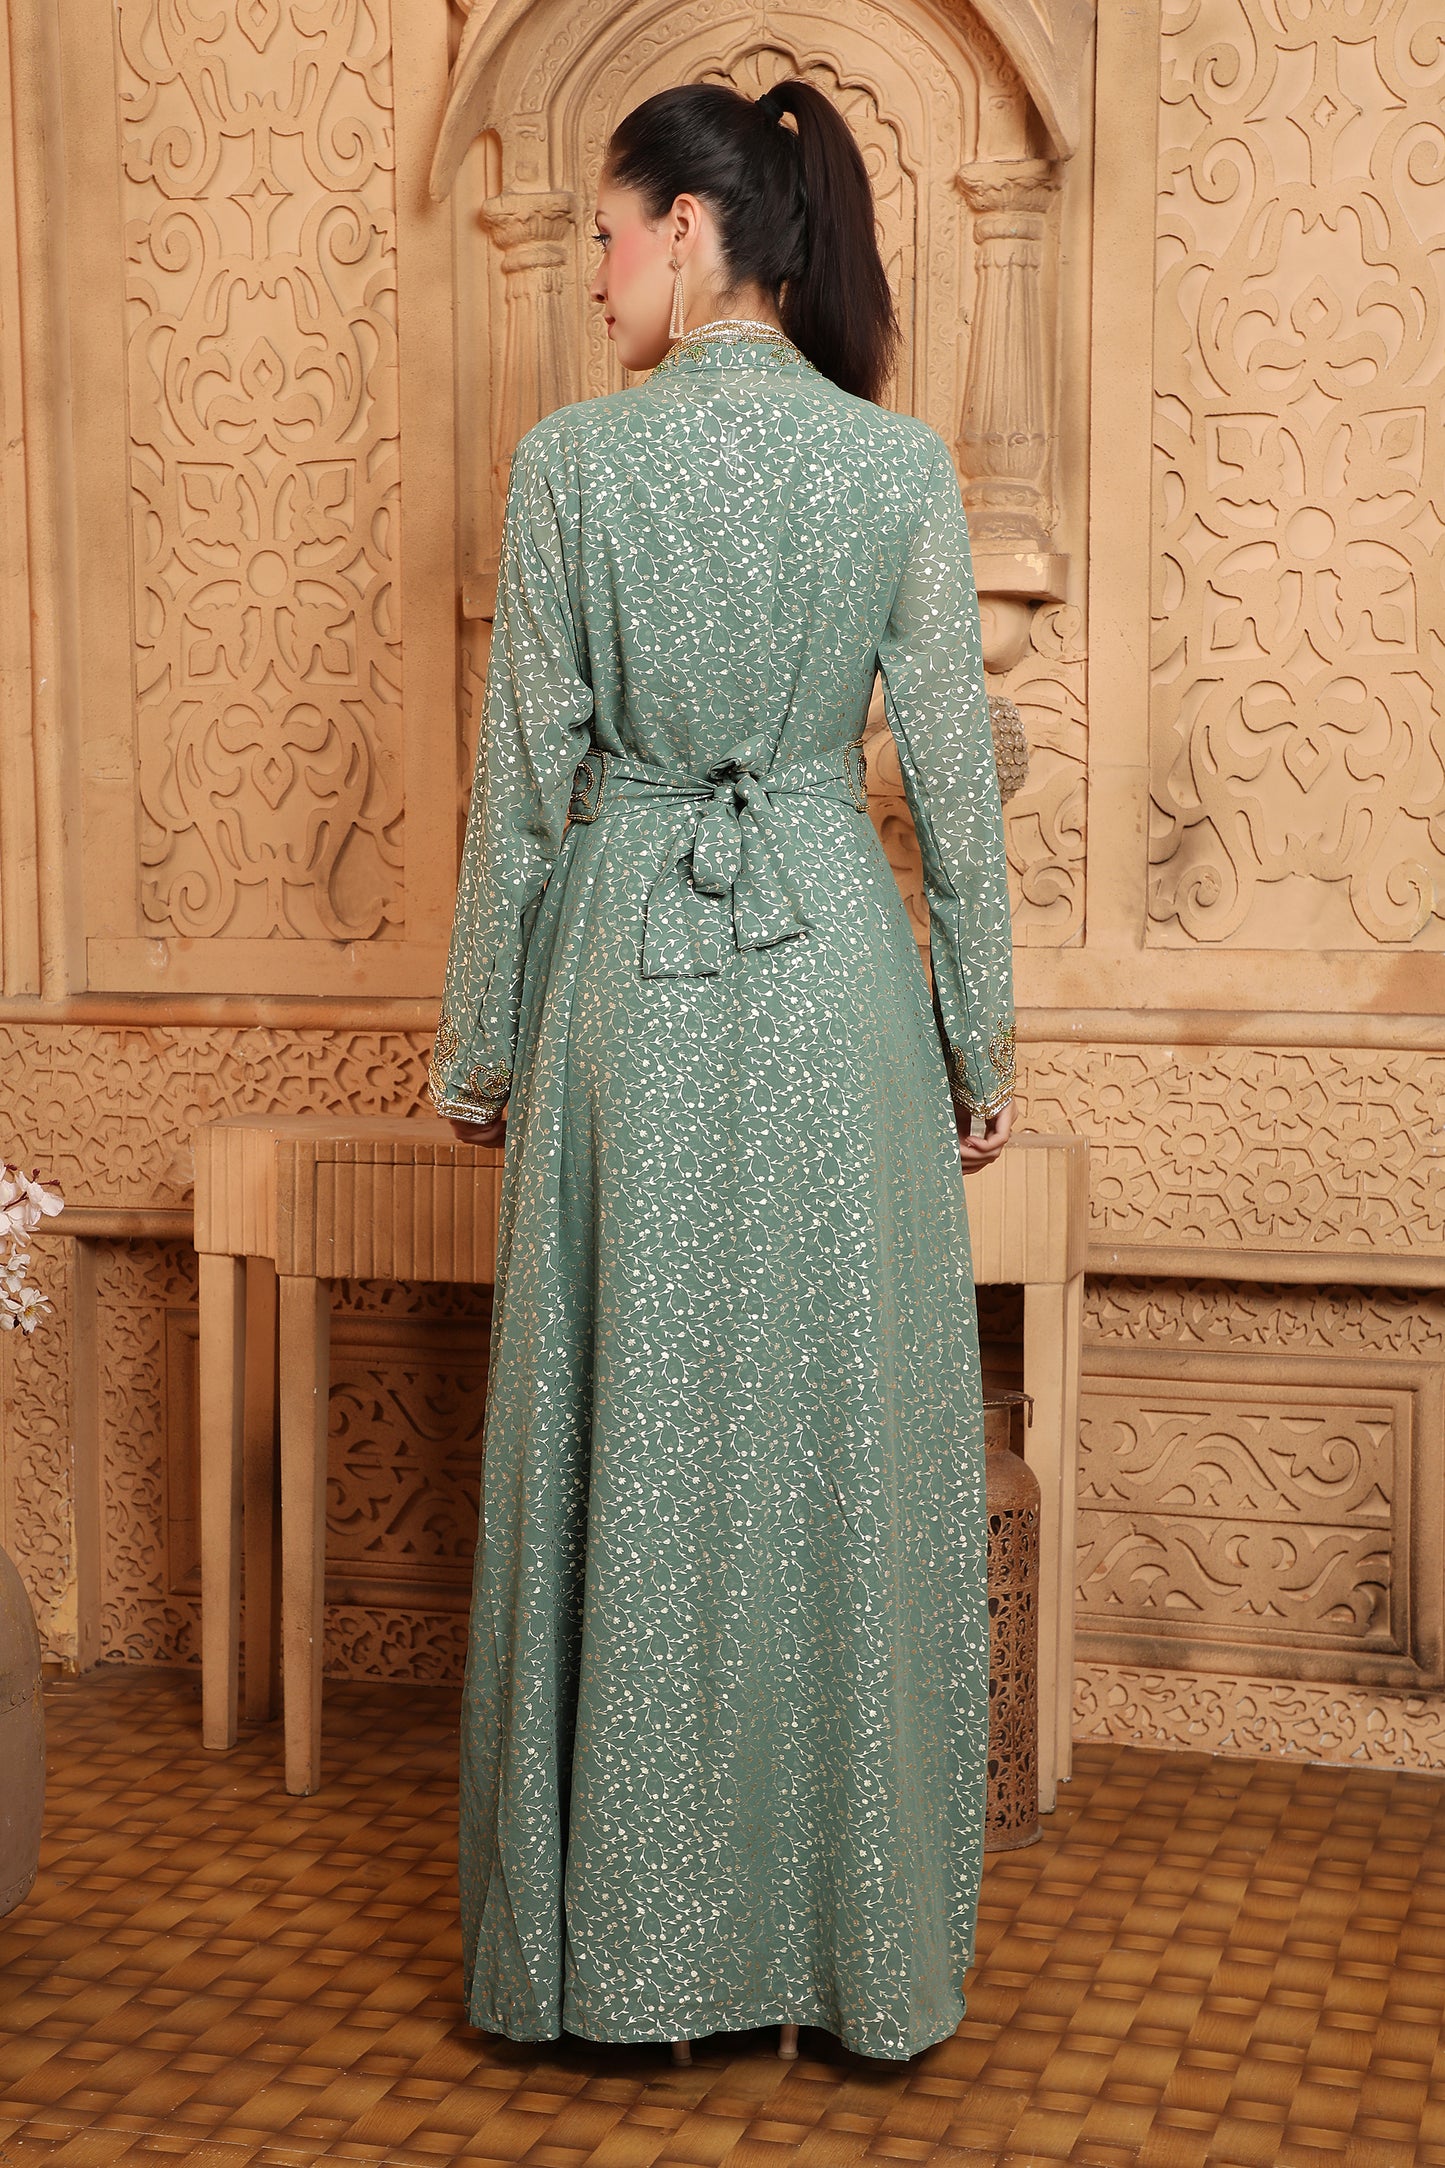 Women's Ethnic Embroidery Abaya Light Green Dress